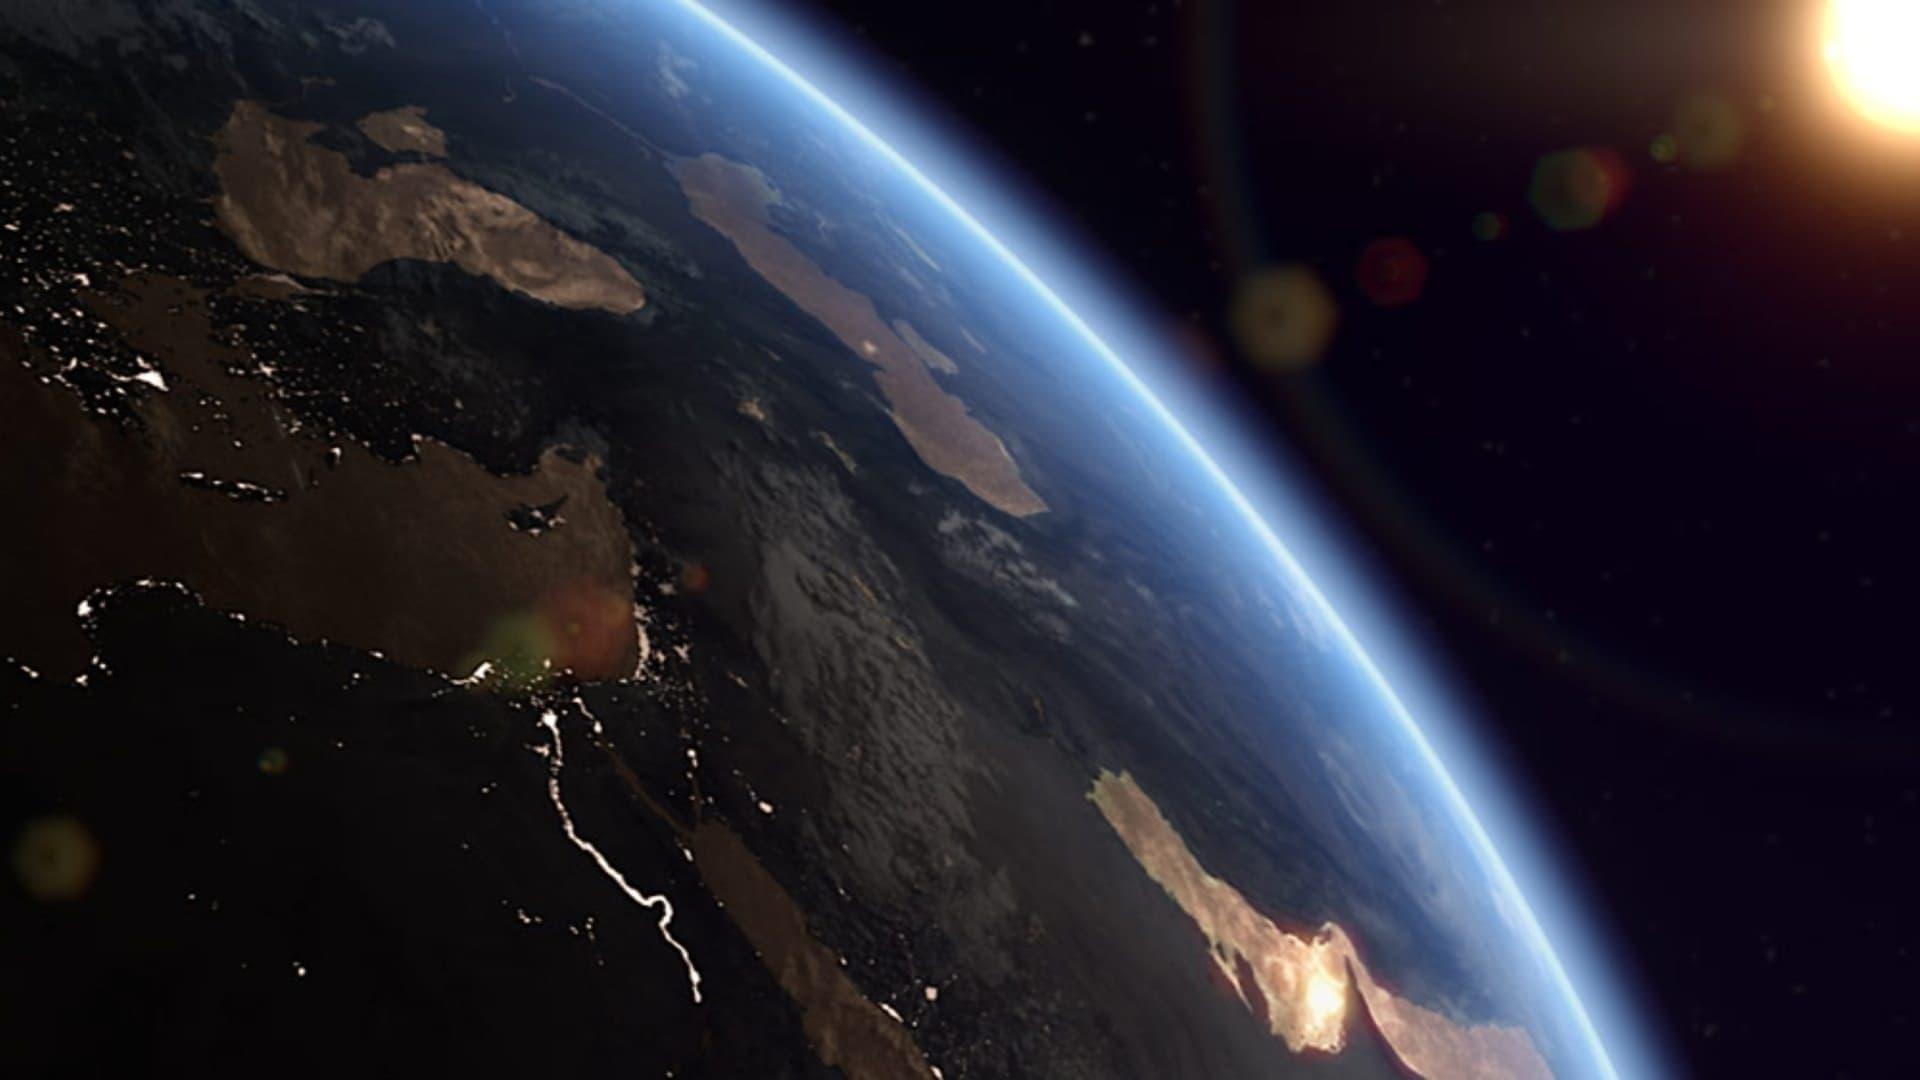 Orbit: Earth's Extraordinary Journey backdrop